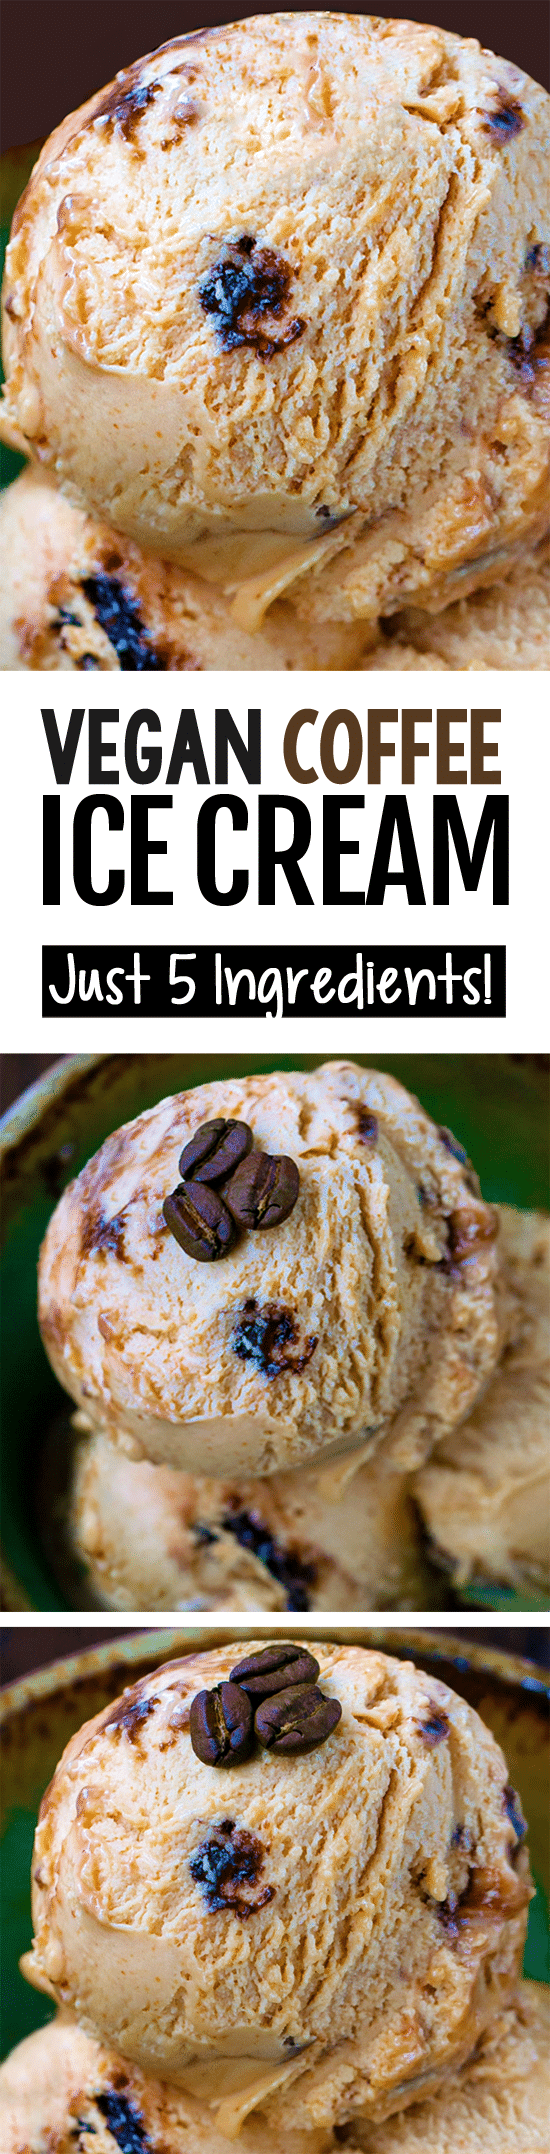 Creamy Vegan Coffee Ice Cream Recipe